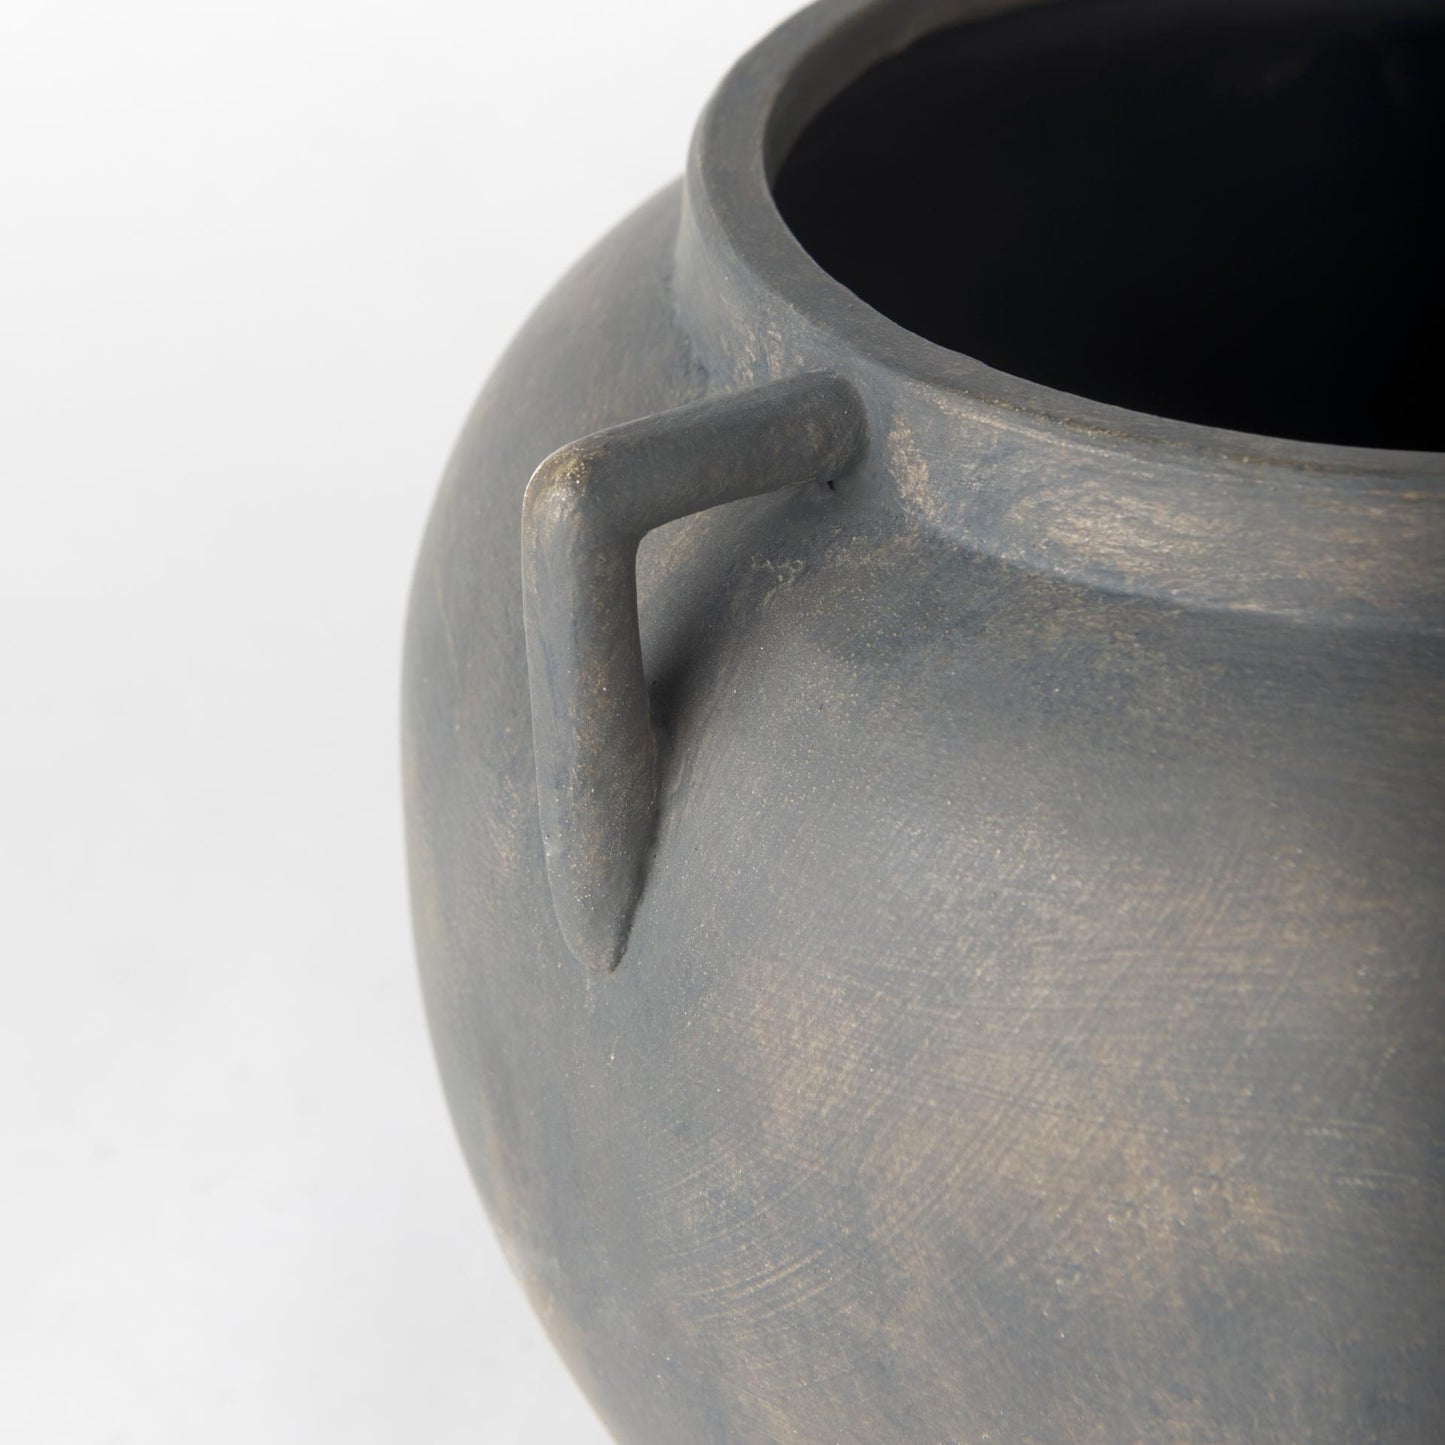 Kilian Short Brown-Gray Double Ear Vase